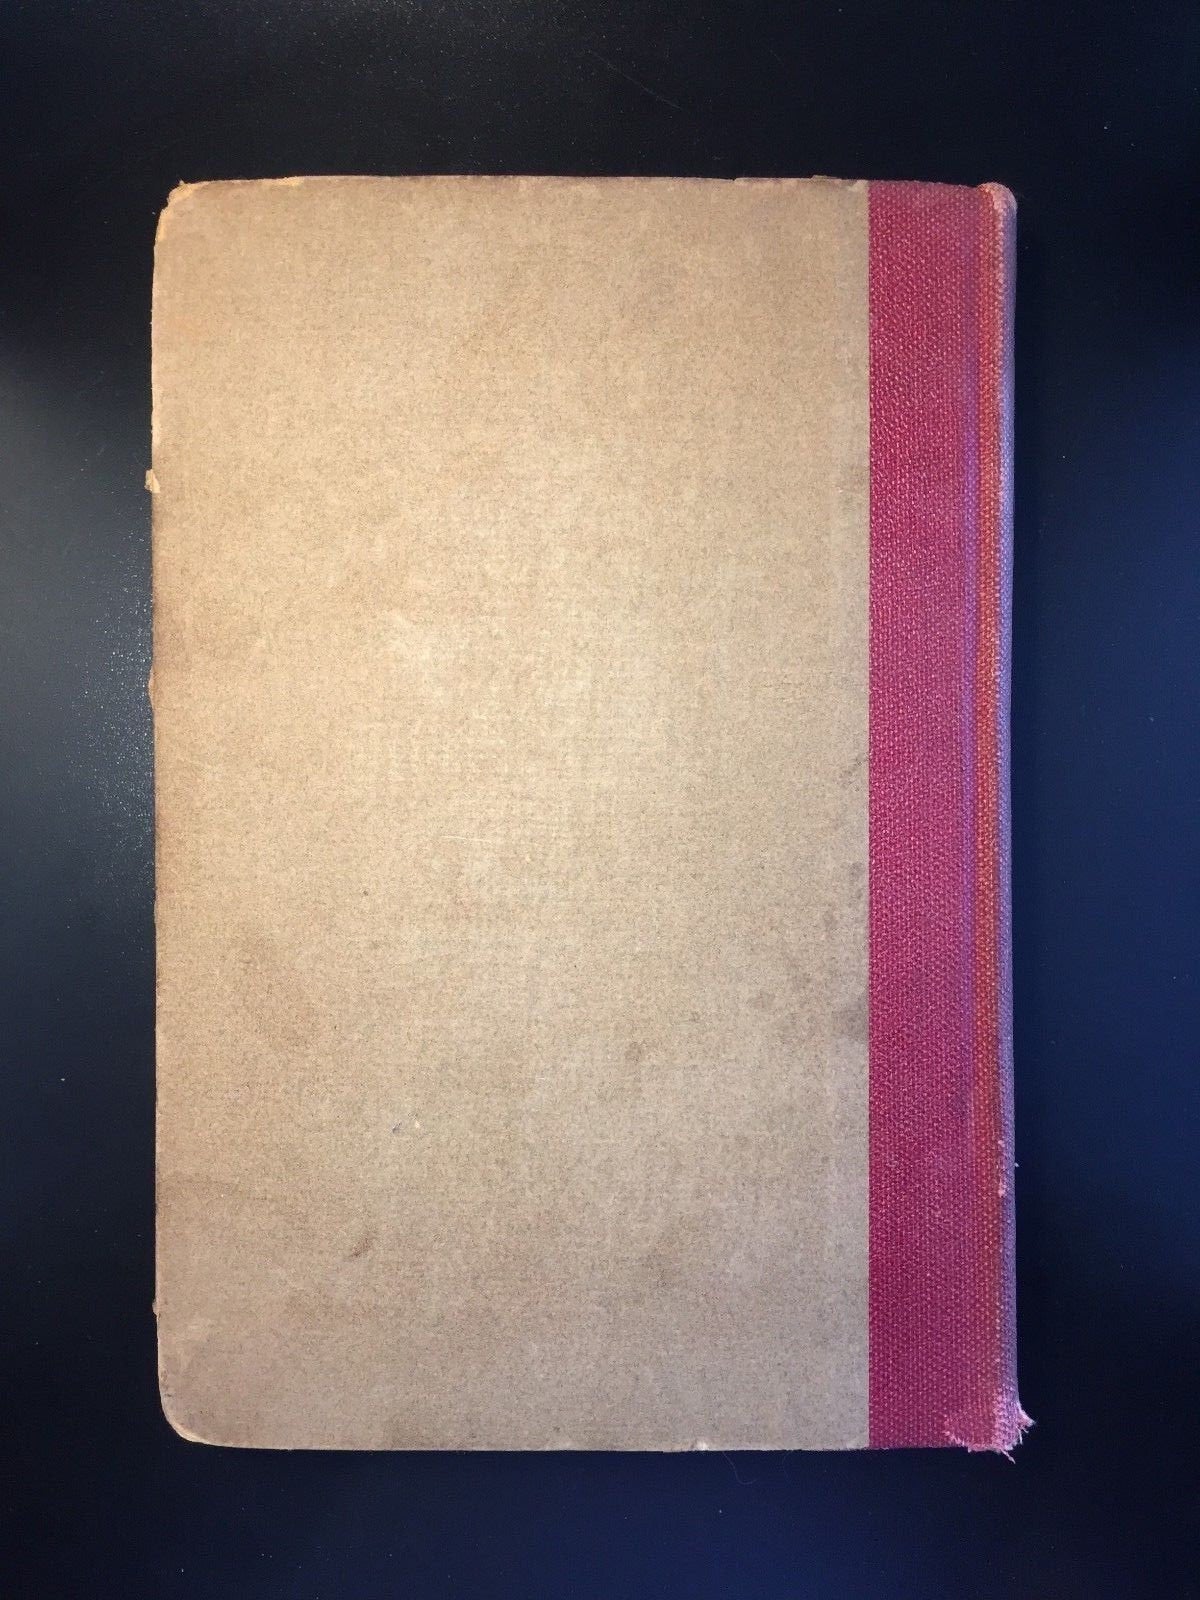 The Writings of Rafael Sabatini, Autograph Ed., Vol VII, Signed, No 433 of 750, 1924